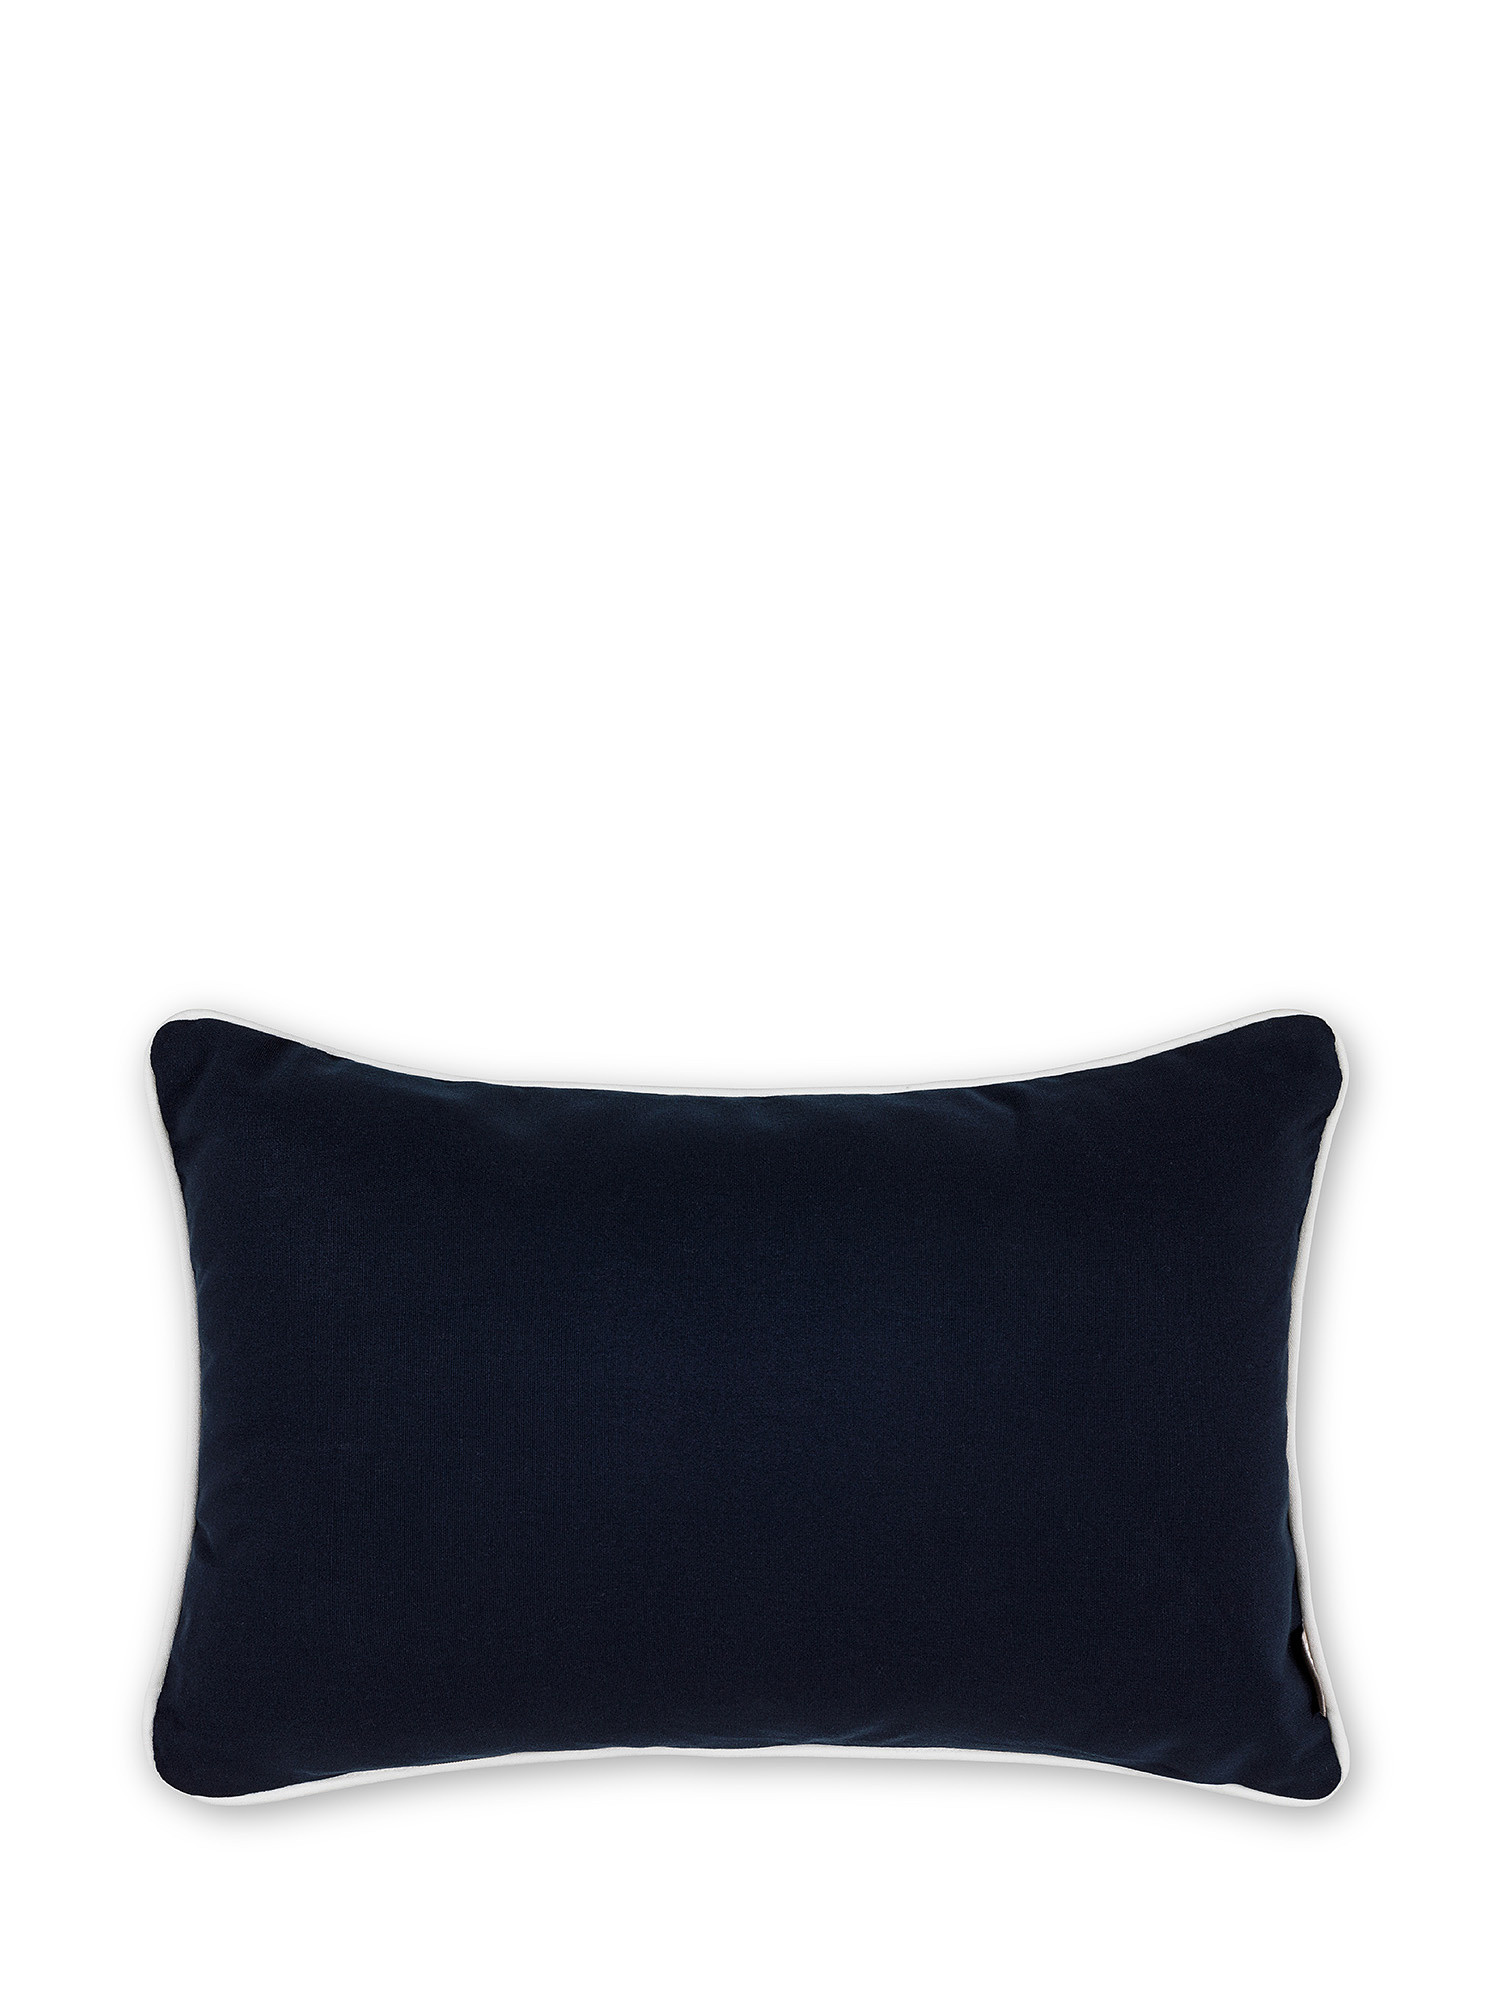 Cuscino da esterno in teflon 30x50cm, Blu, large image number 1